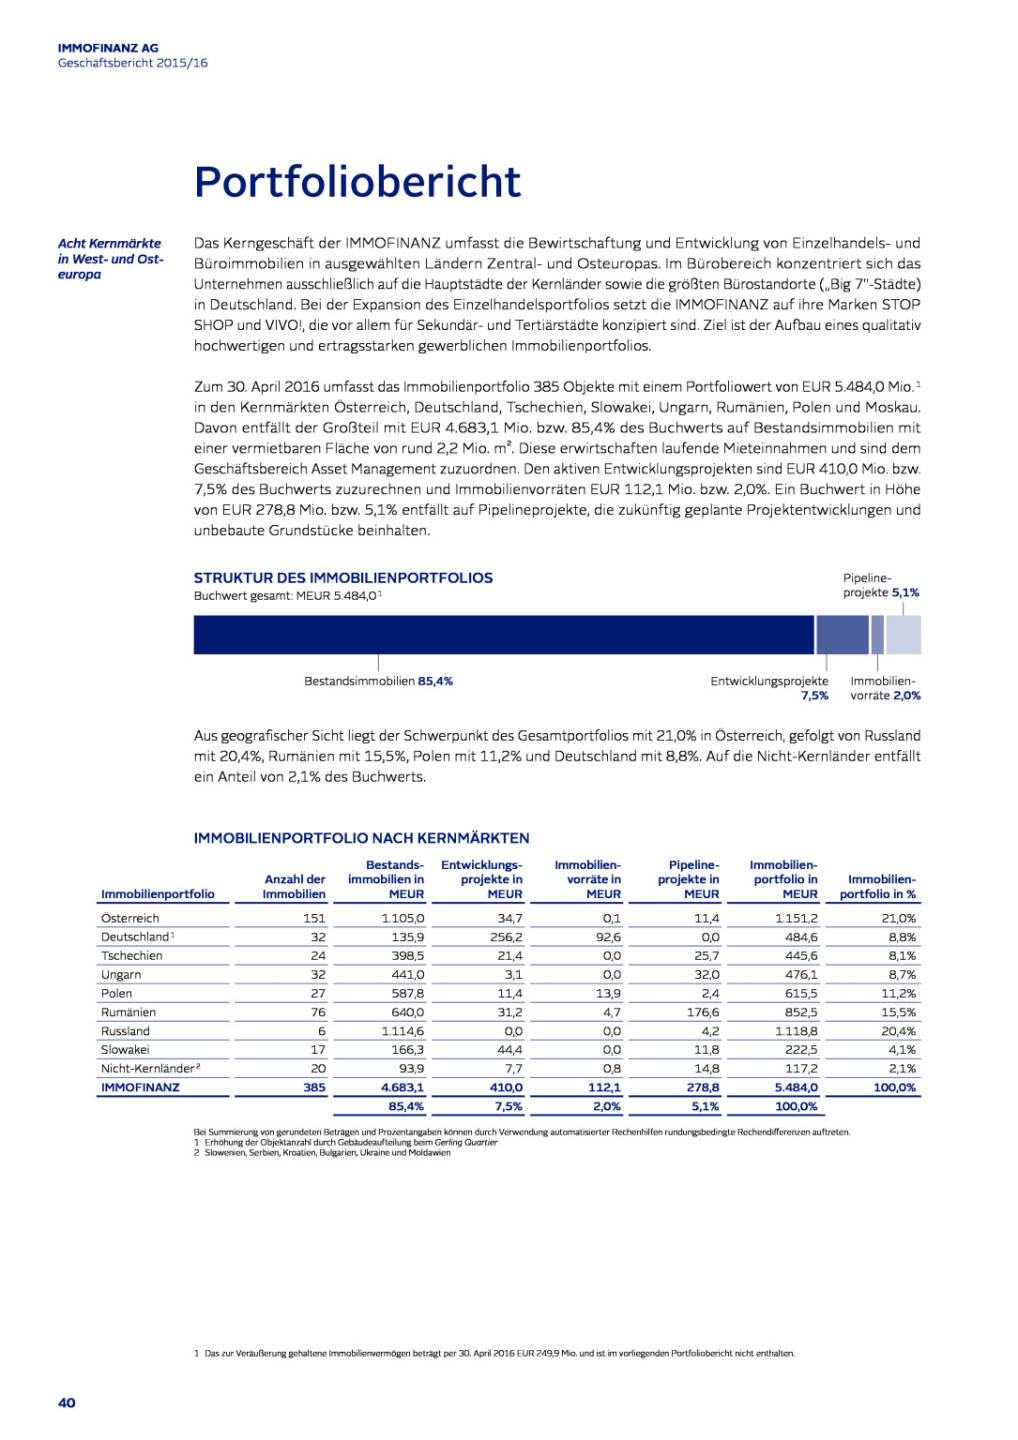 Immofinanz: Portfoliobericht, Seite 1/17, komplettes Dokument unter http://boerse-social.com/static/uploads/file_1510_immofinanz_portfoliobericht.pdf